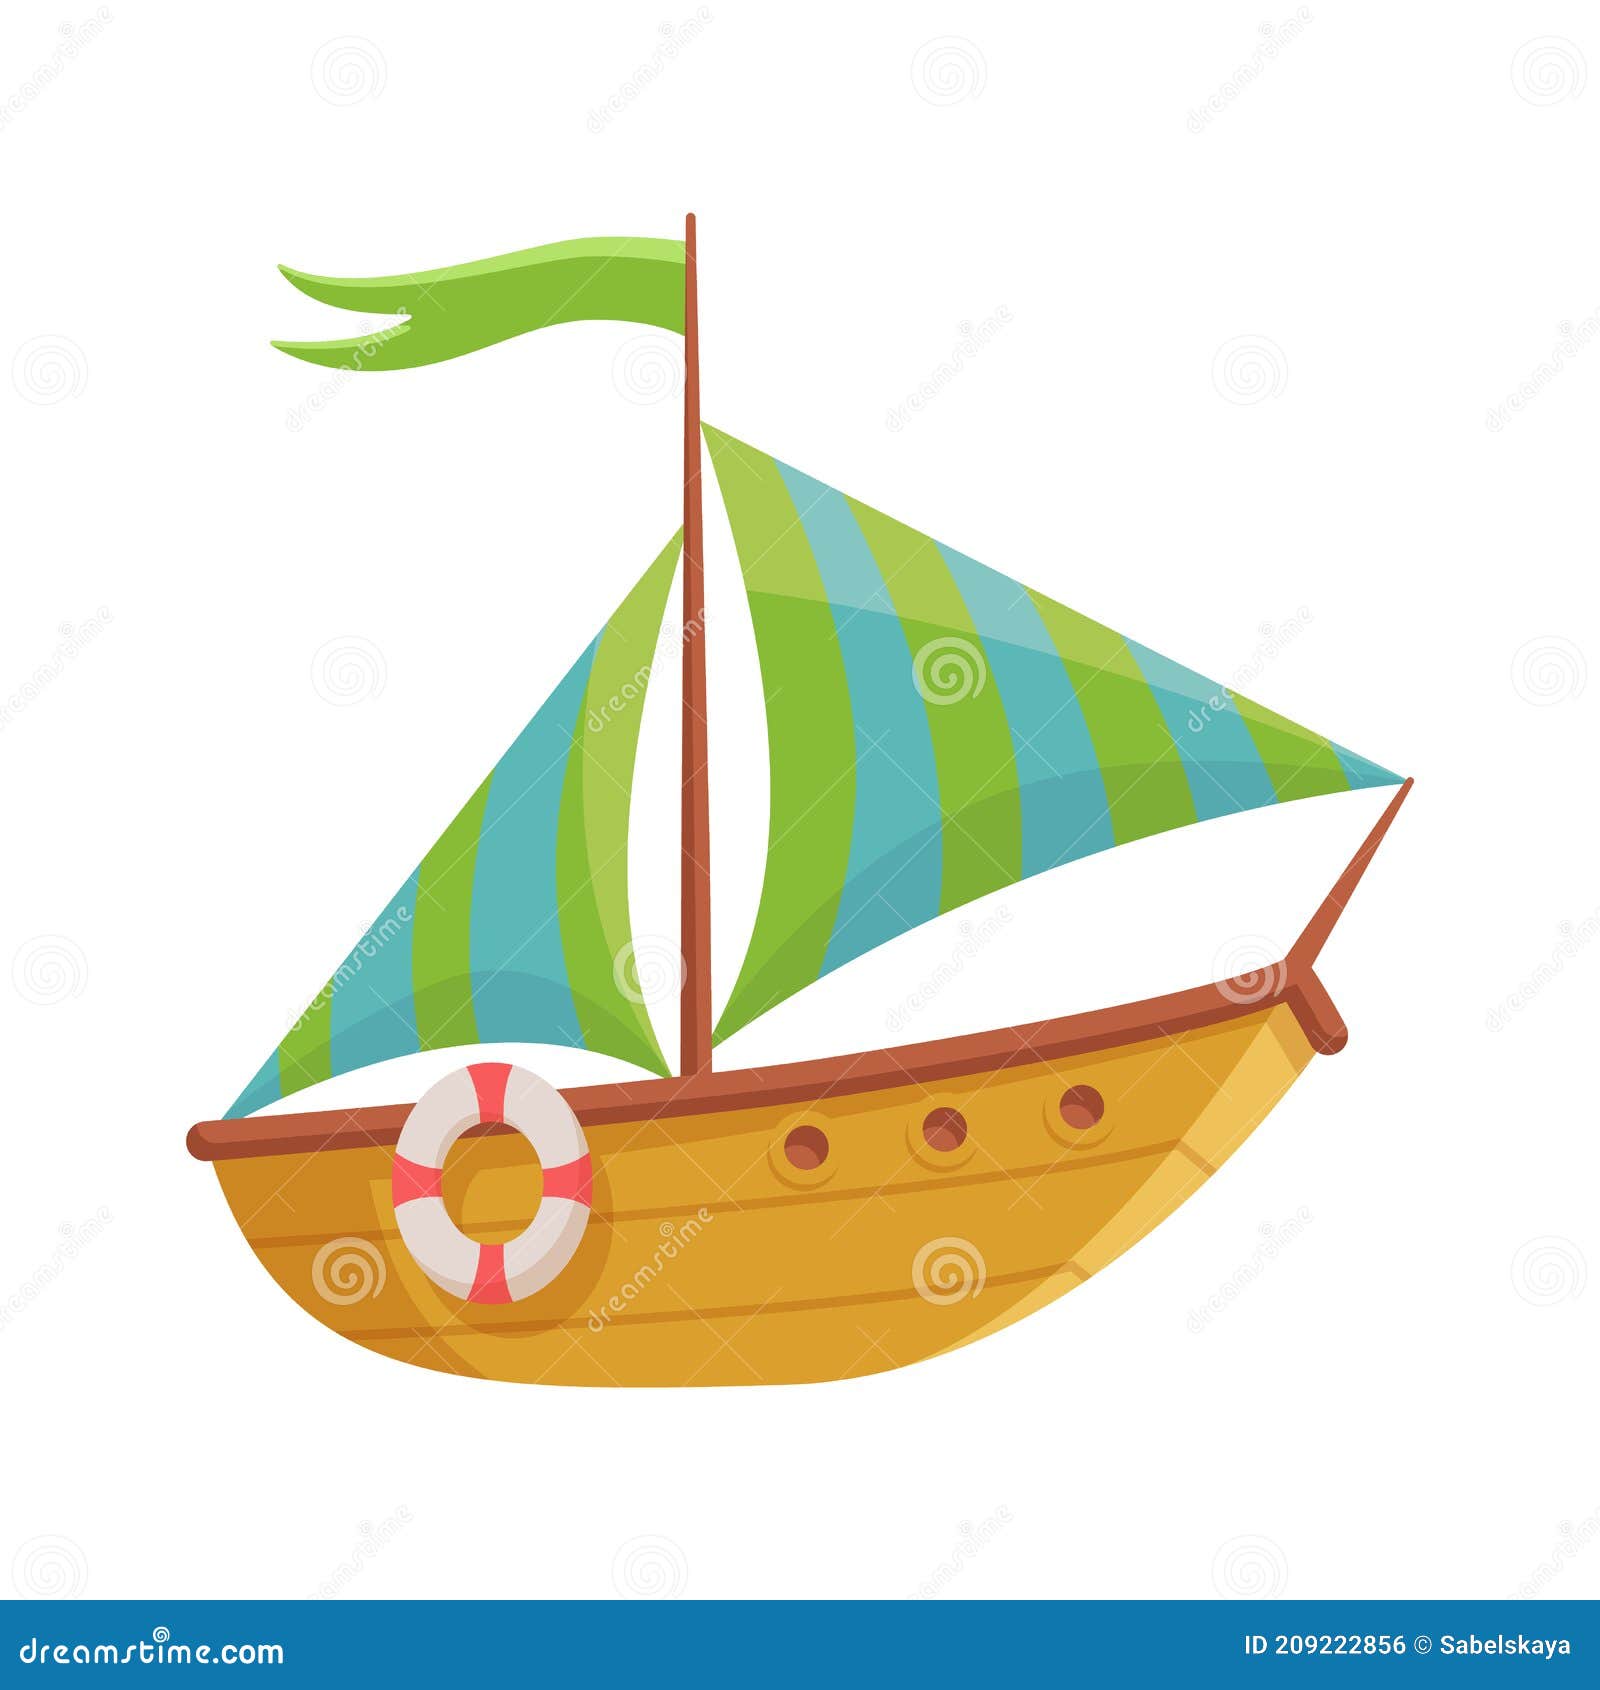 sailboat toy cartoon